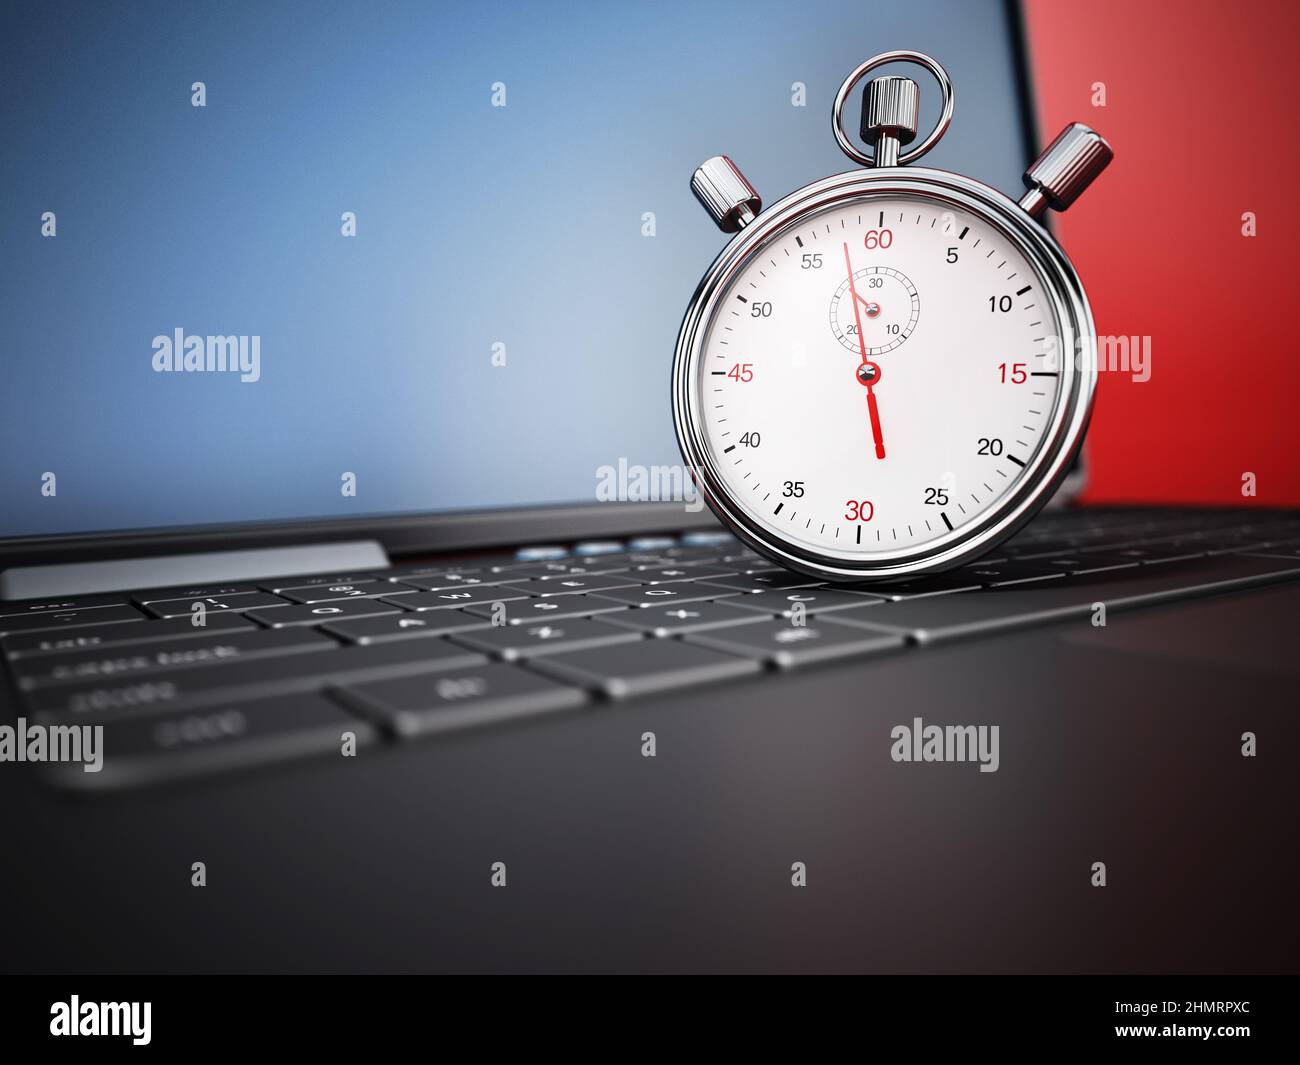 Chronometer standing on laptop keyboard. 3D illustration. Stock Photo